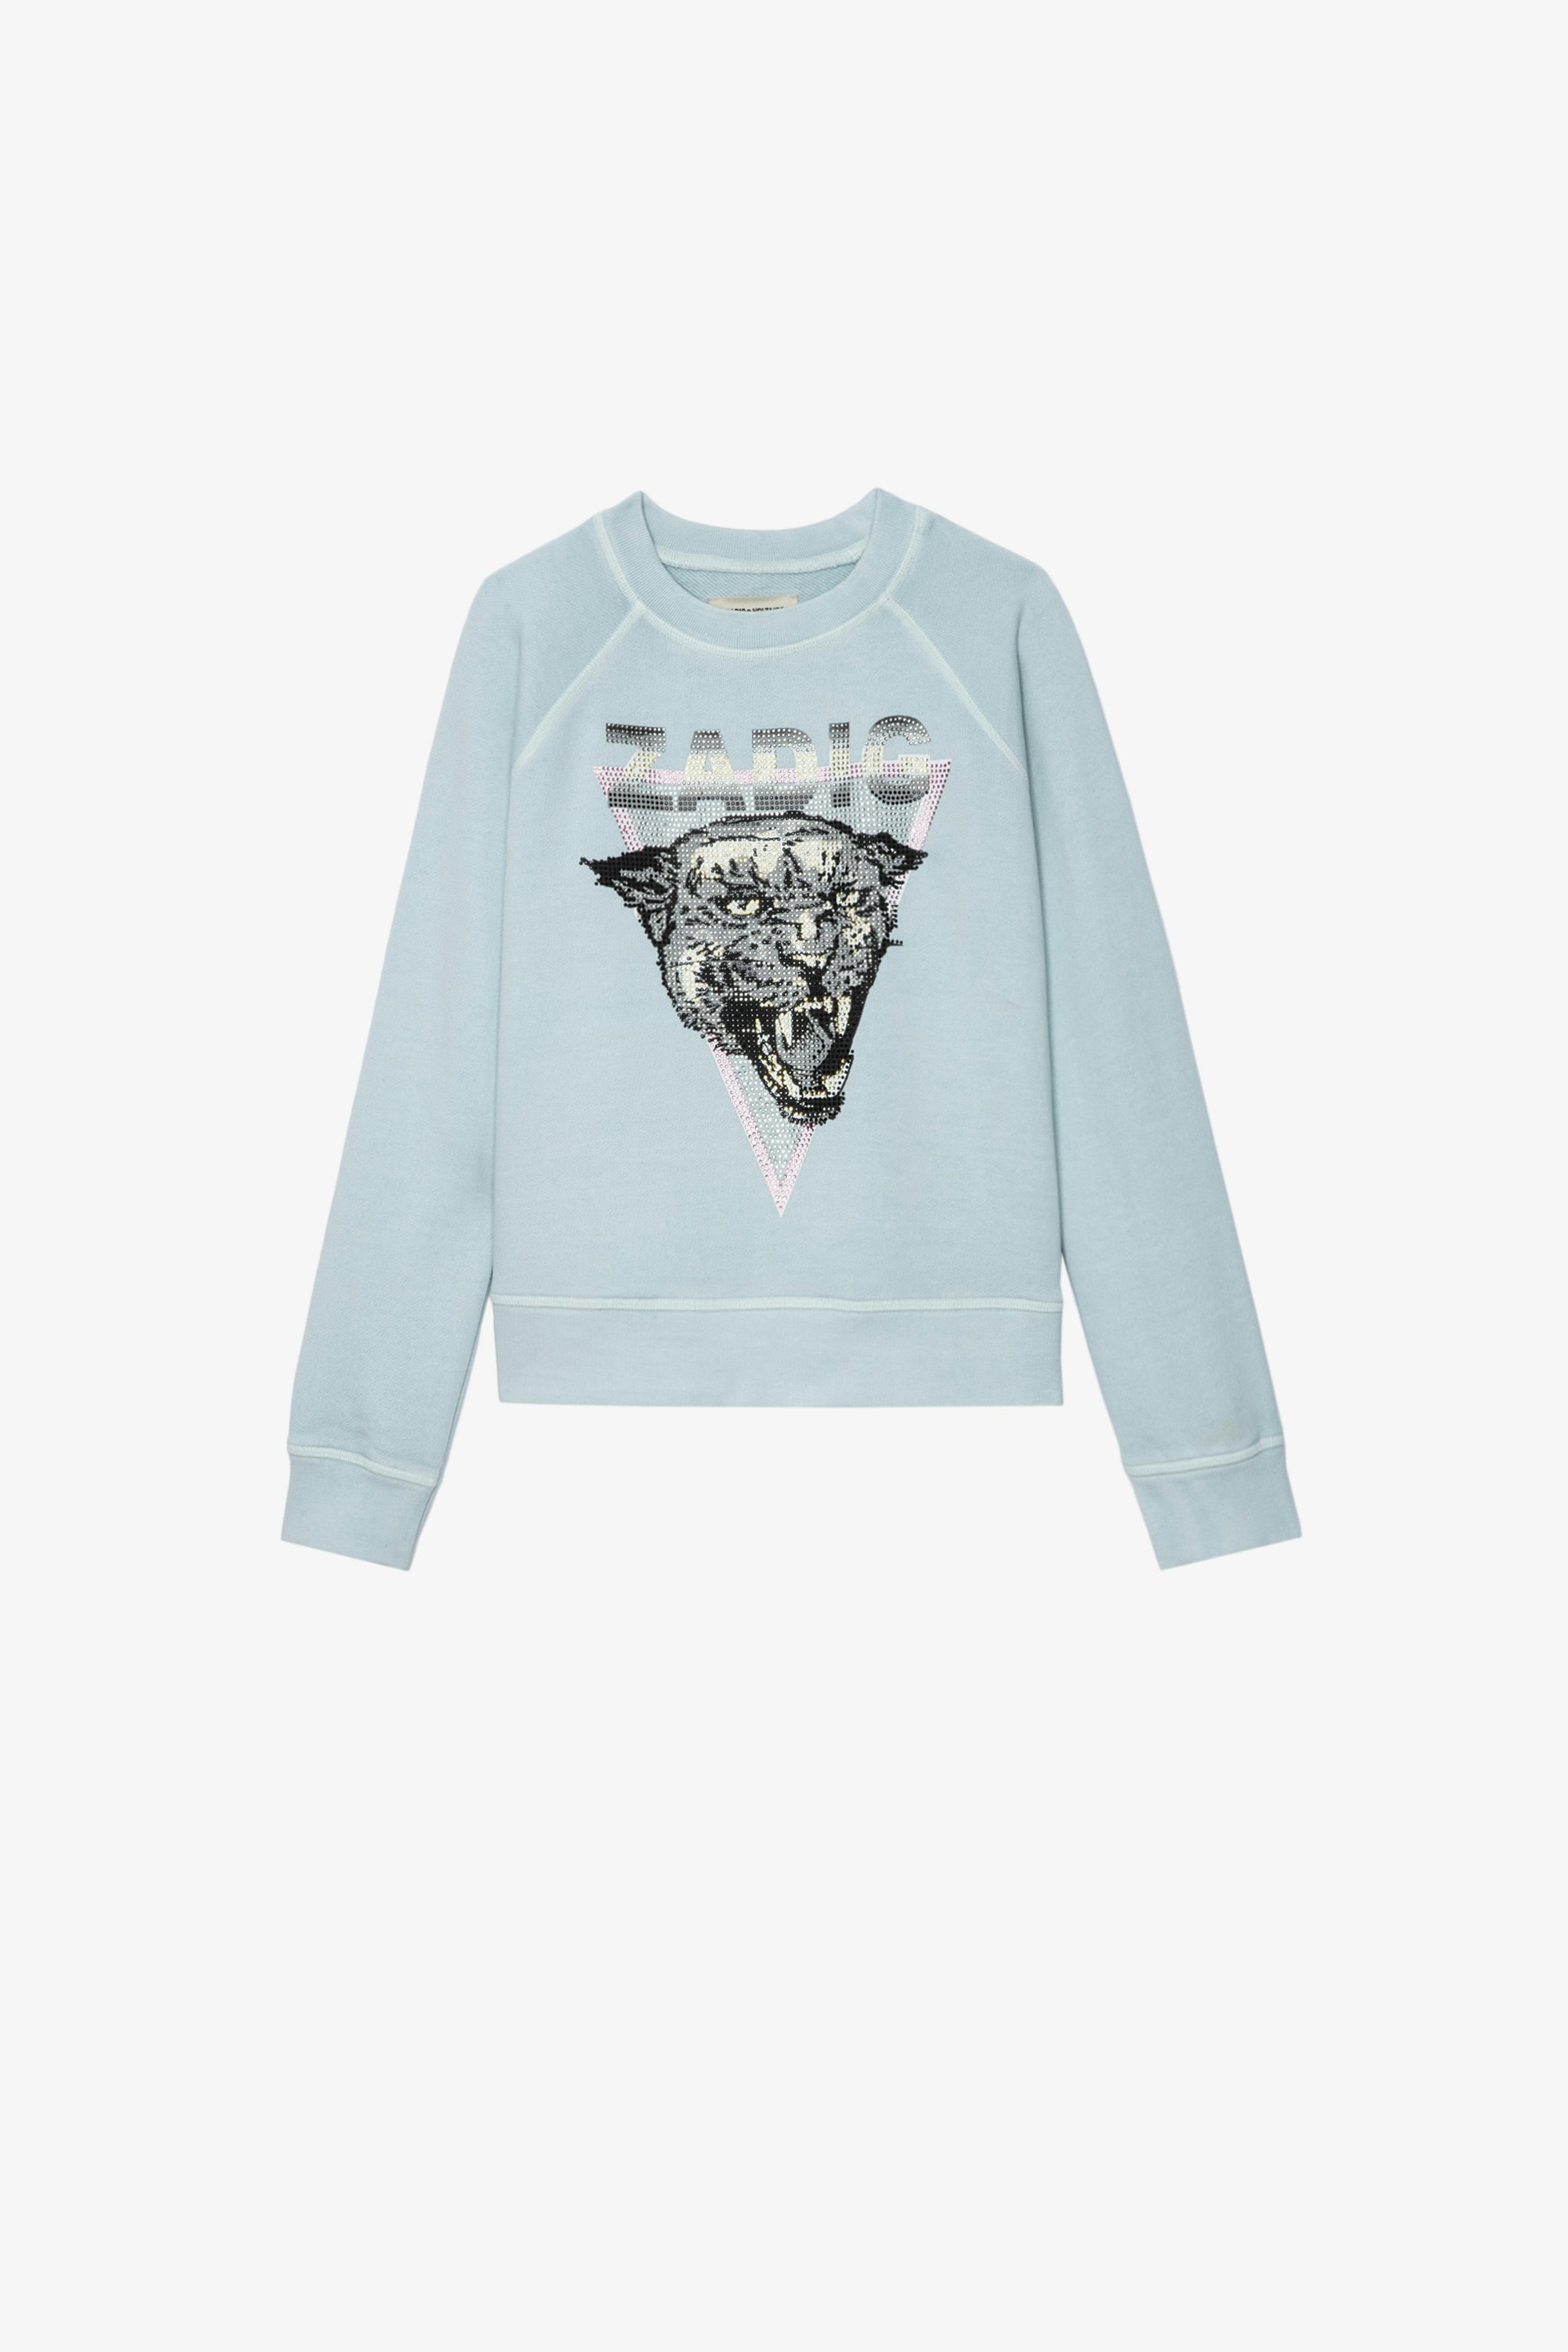 Upper Kids' Sweatshirt Kids’ sky-blue cotton sweatshirt with a crystal-studded tiger motif